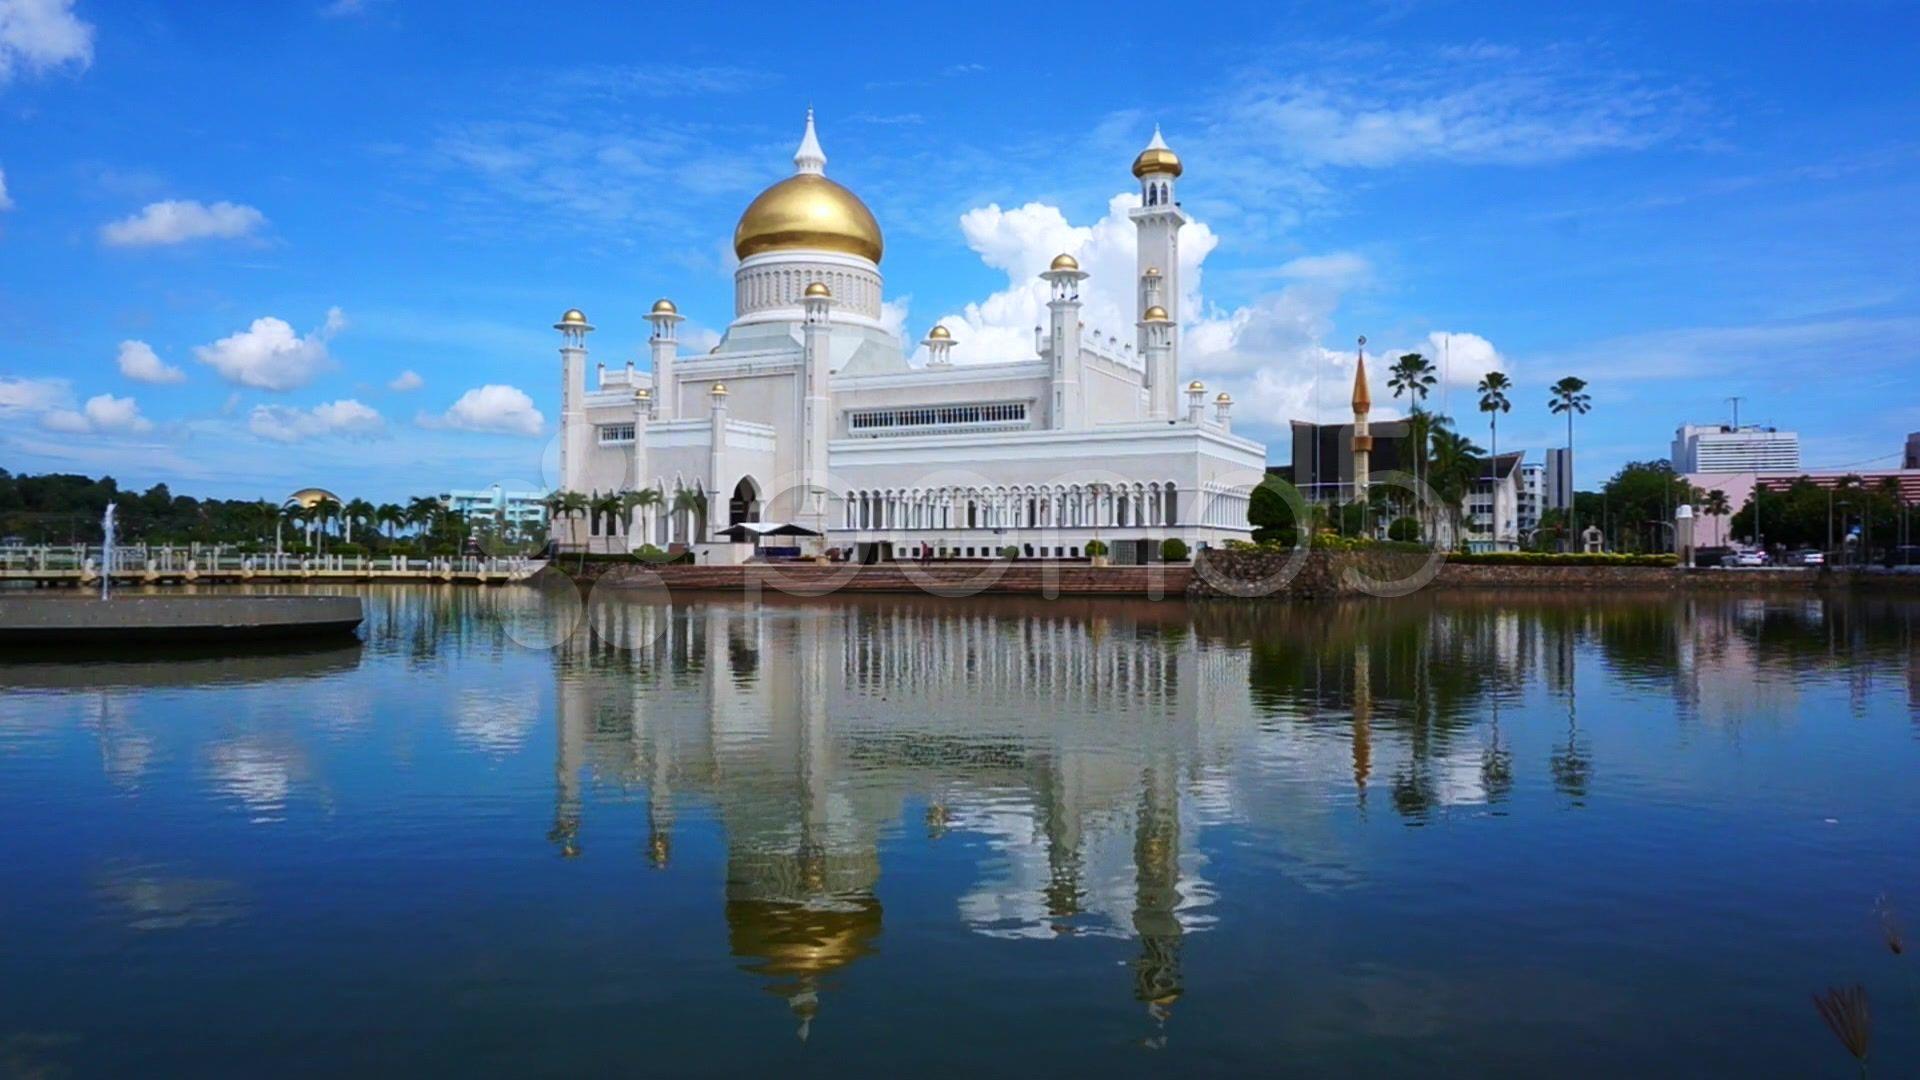 Masjid Sultan Omar Ali Saifuddin Mosque in Bandar Seri Begawan